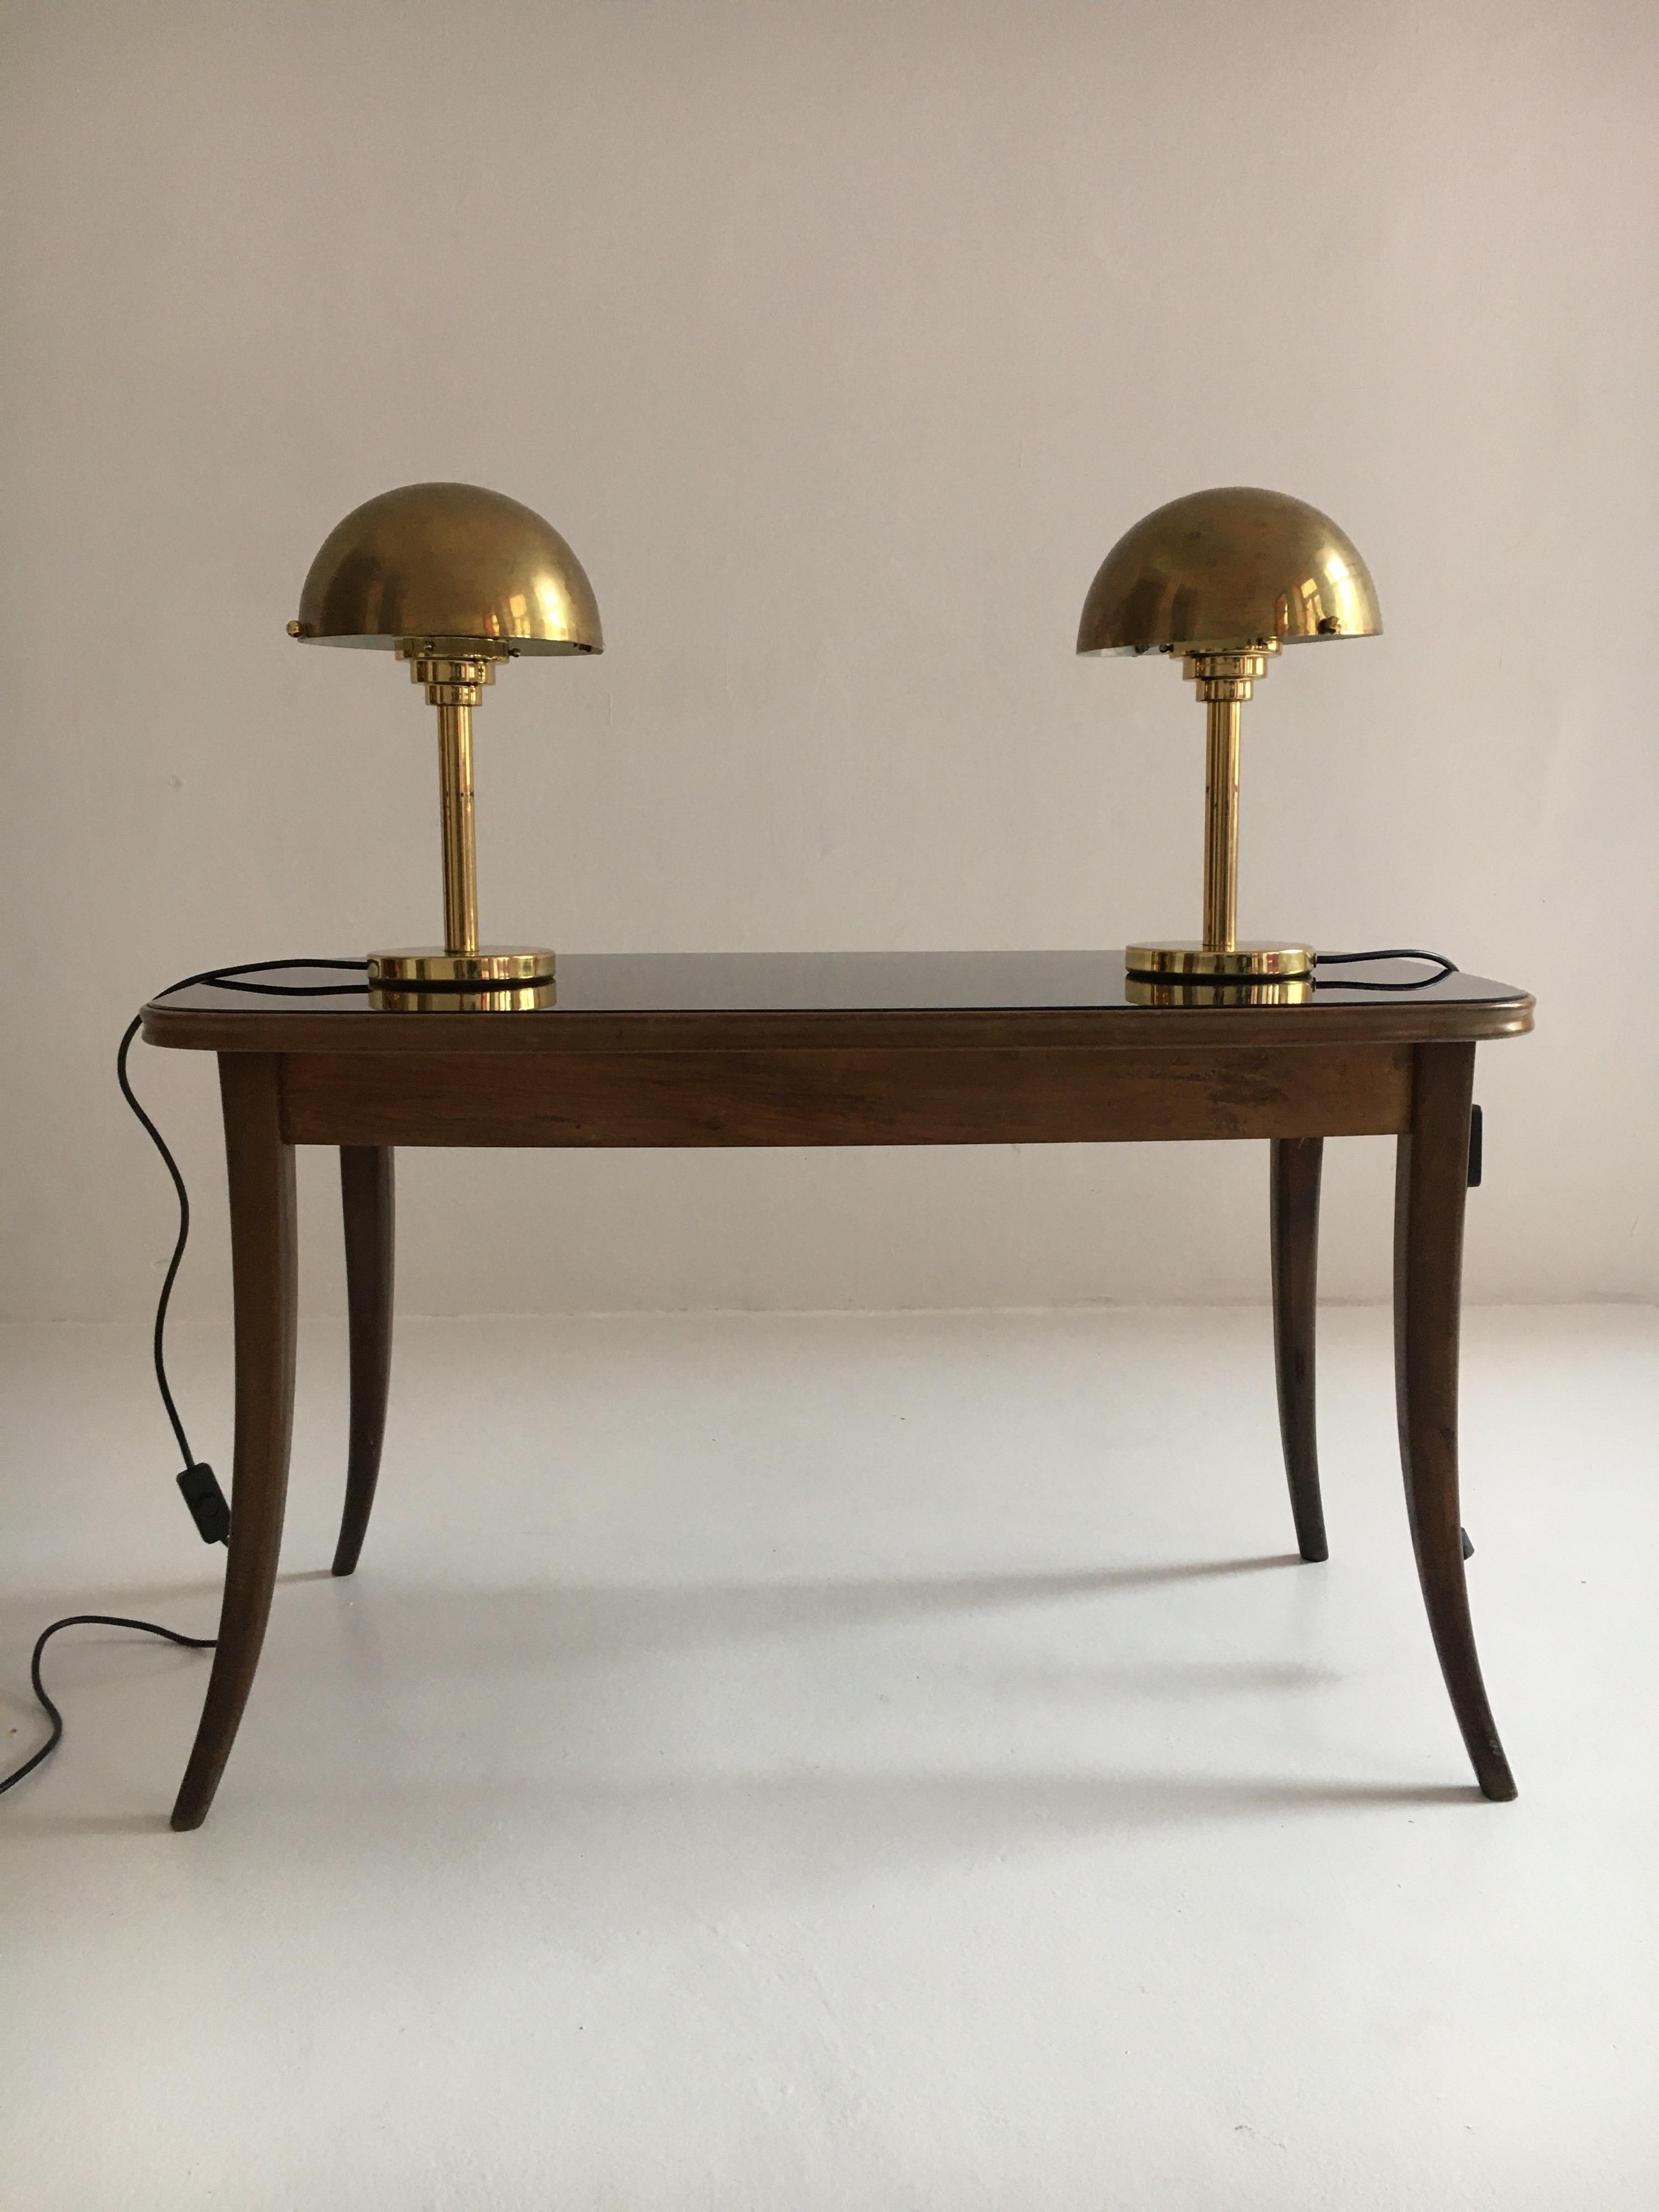 Art Deco inspired patinated brass mushroom lamps, Austria, 1970s.